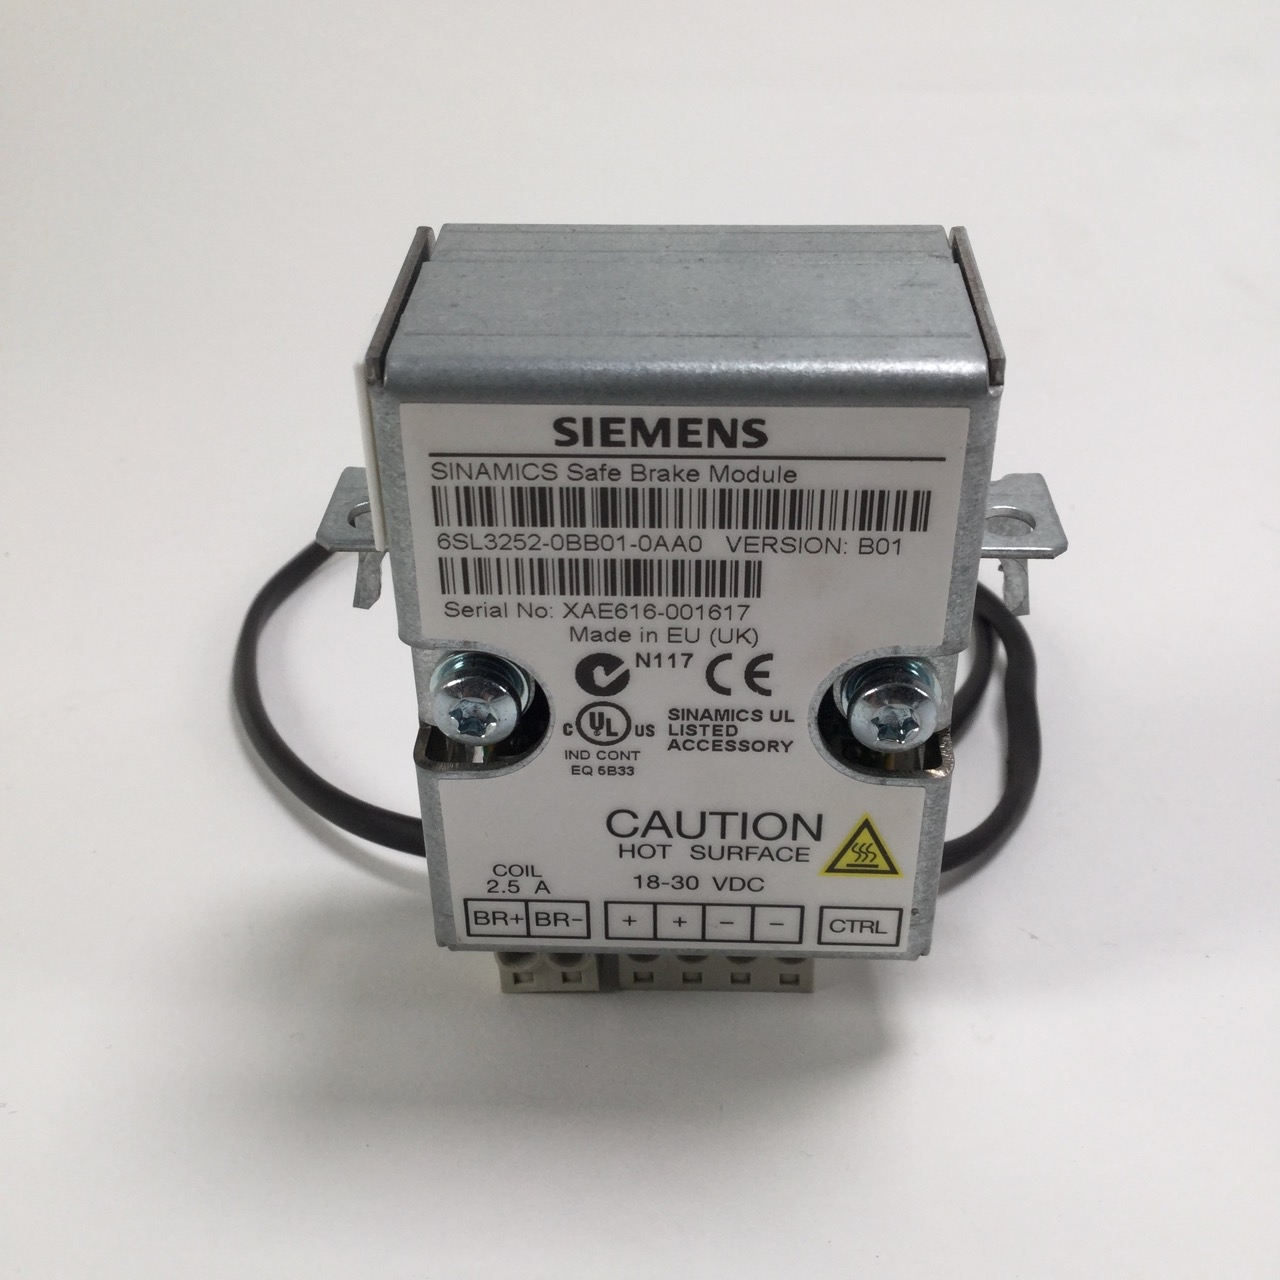 Siemens 6sl3252 0bb01 0aa0 Sinamics Safe Brake Module Used Ump